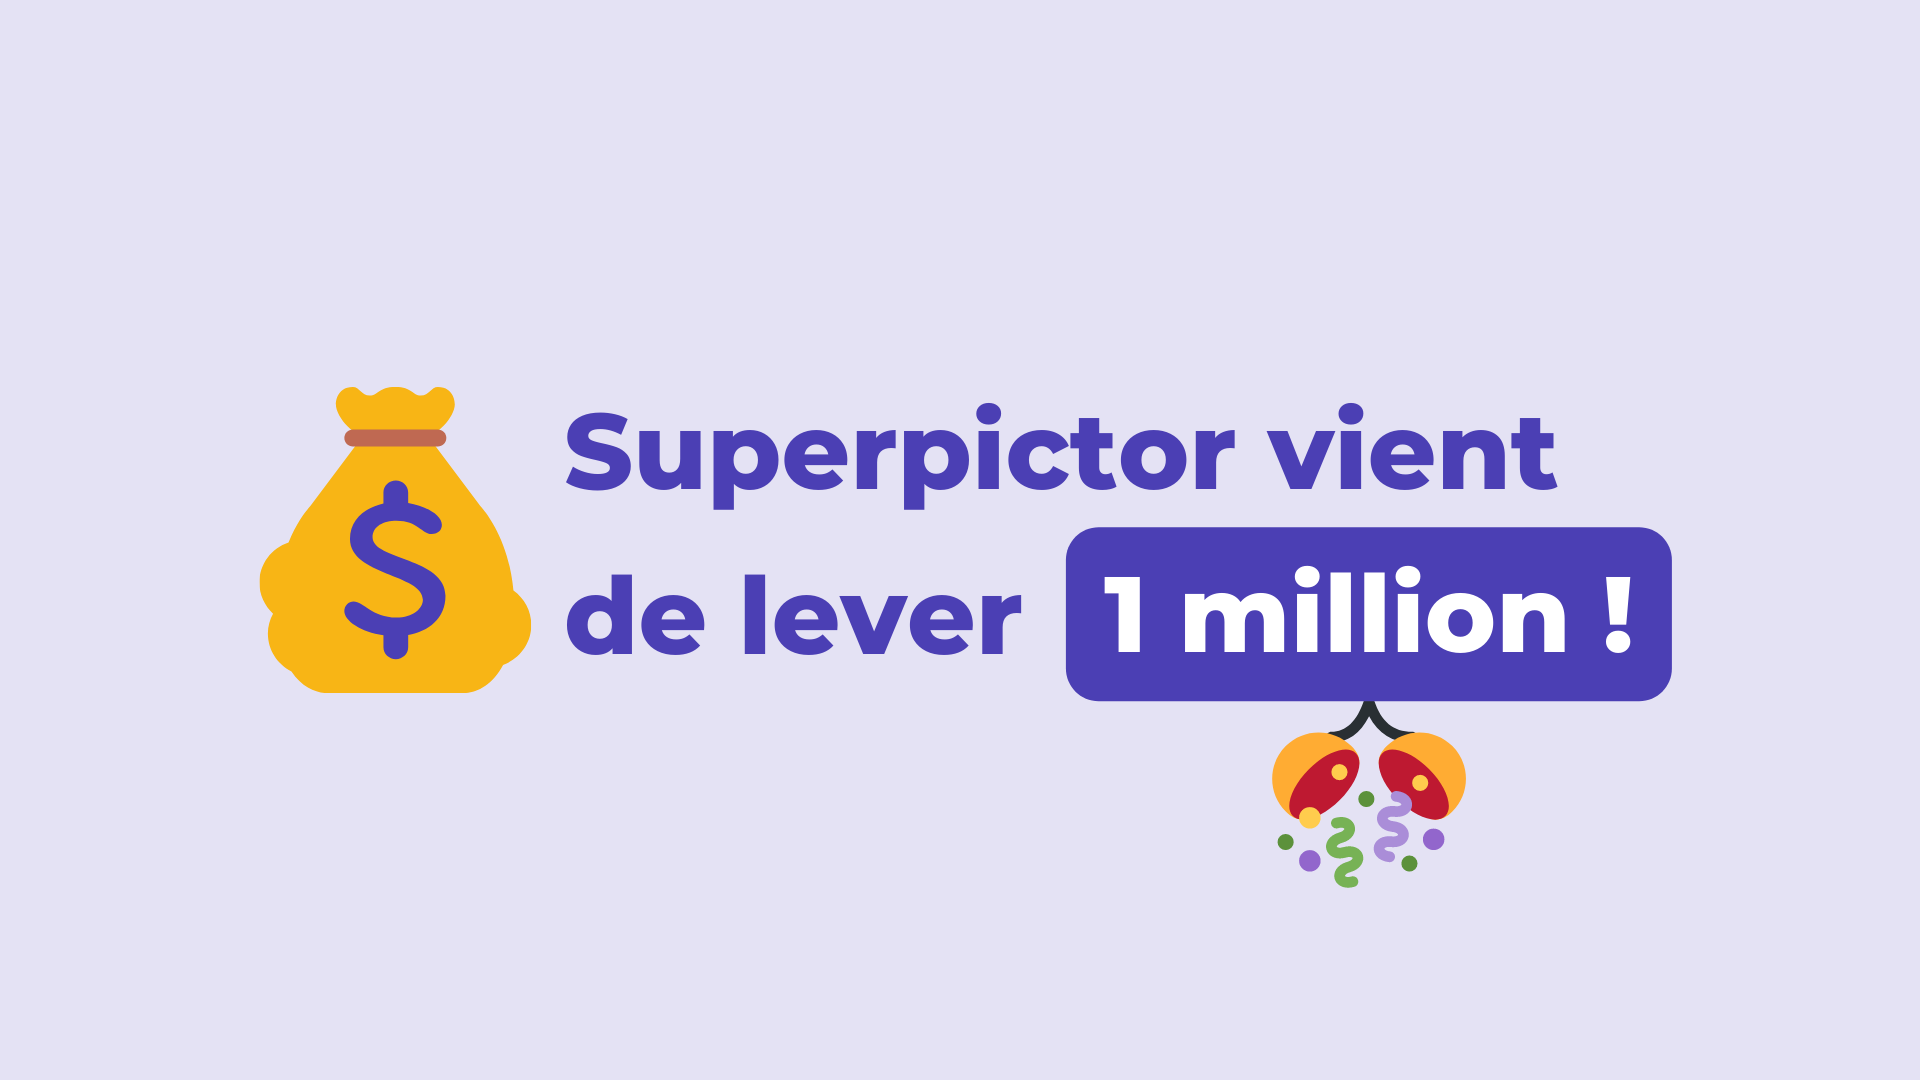 Superpictor lève 1 million d'euros 🤩